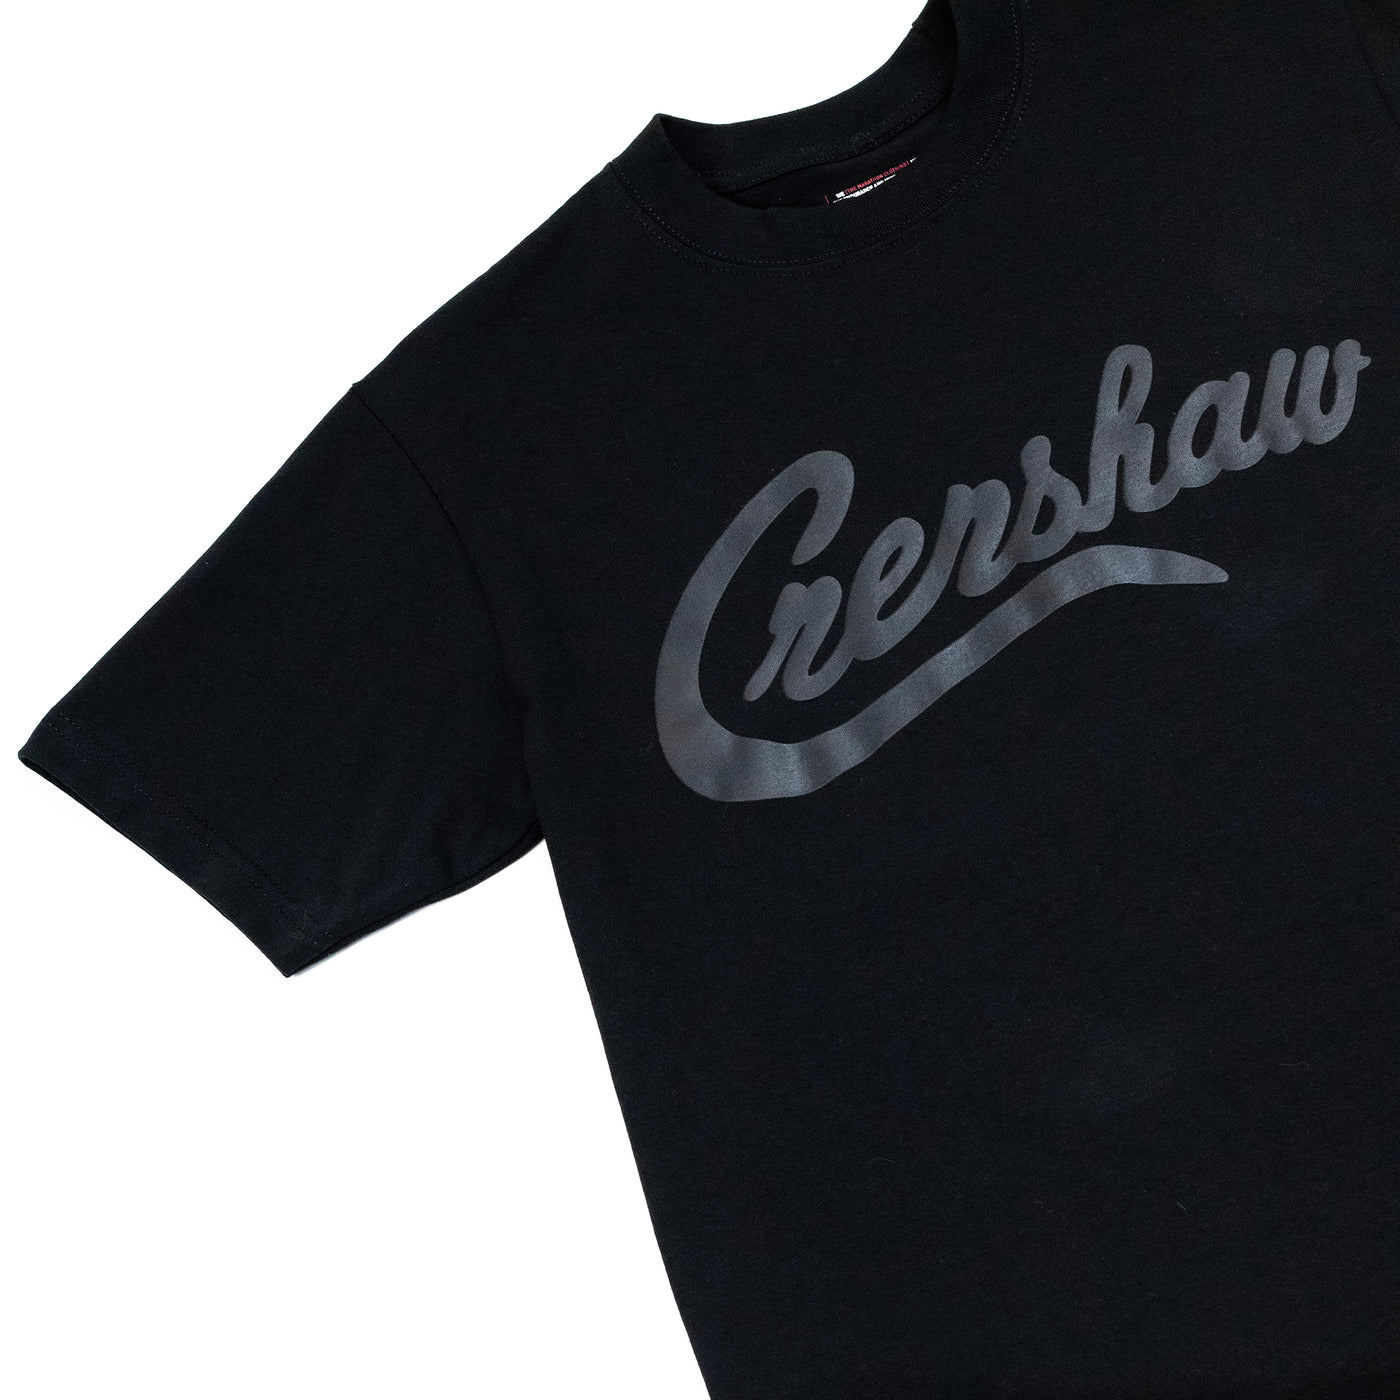 Crenshaw T-Shirt - Black/Black - Detail